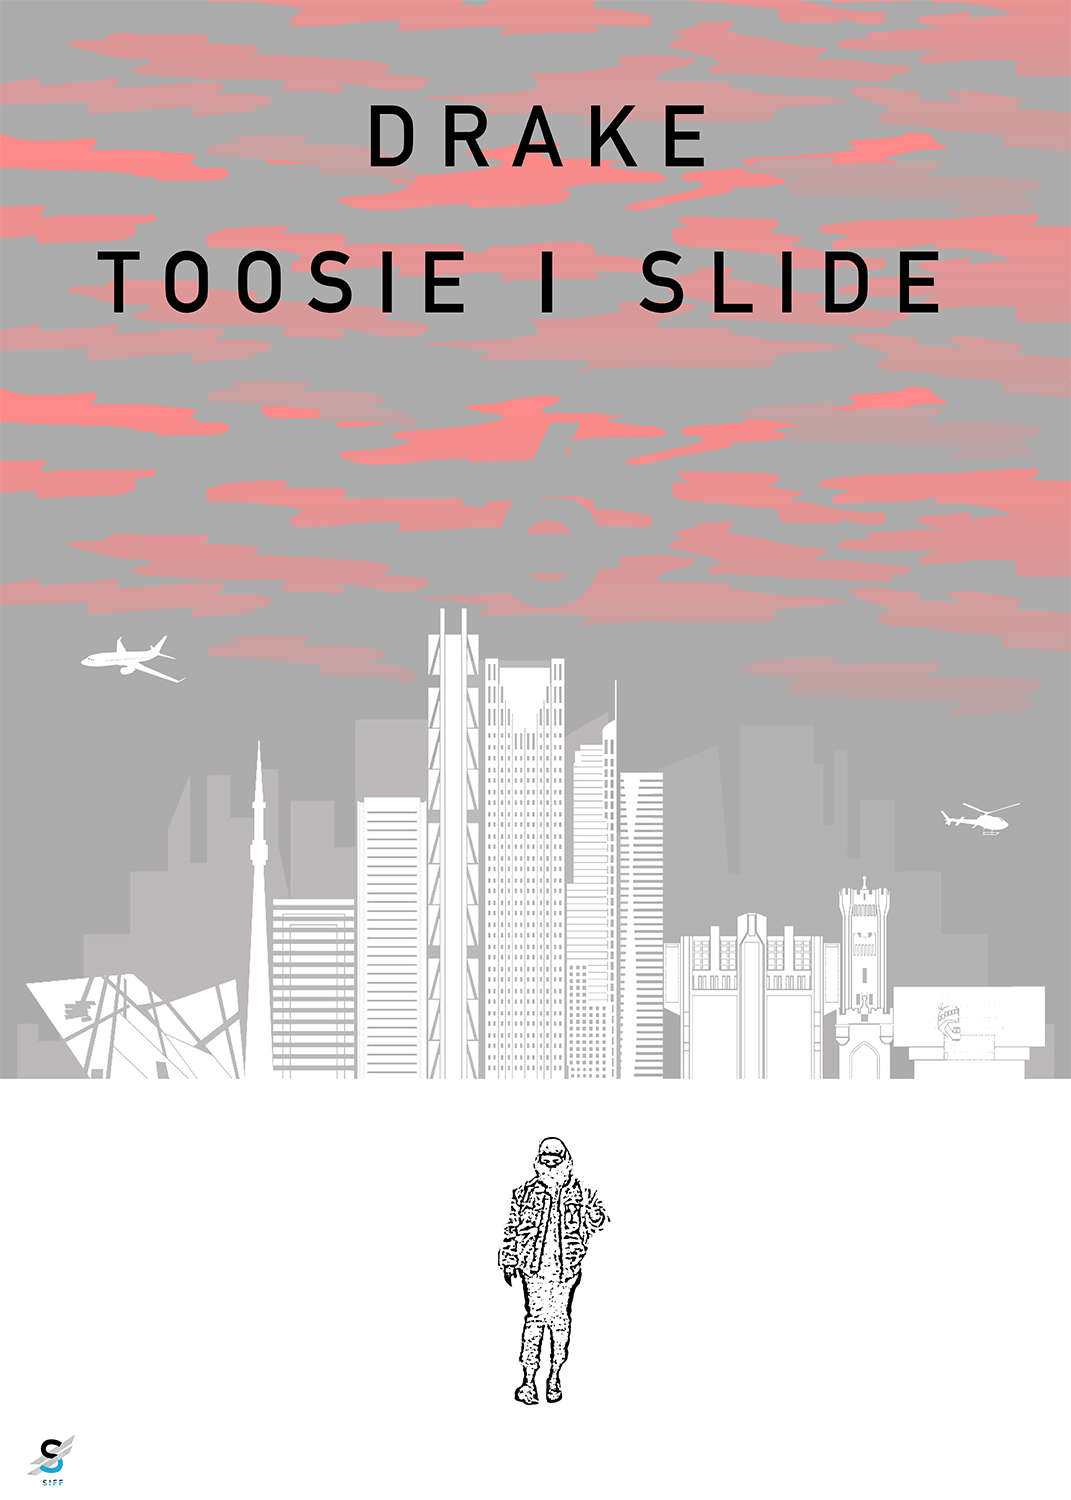 Drake Toosie Slide Animated Poster(2020)